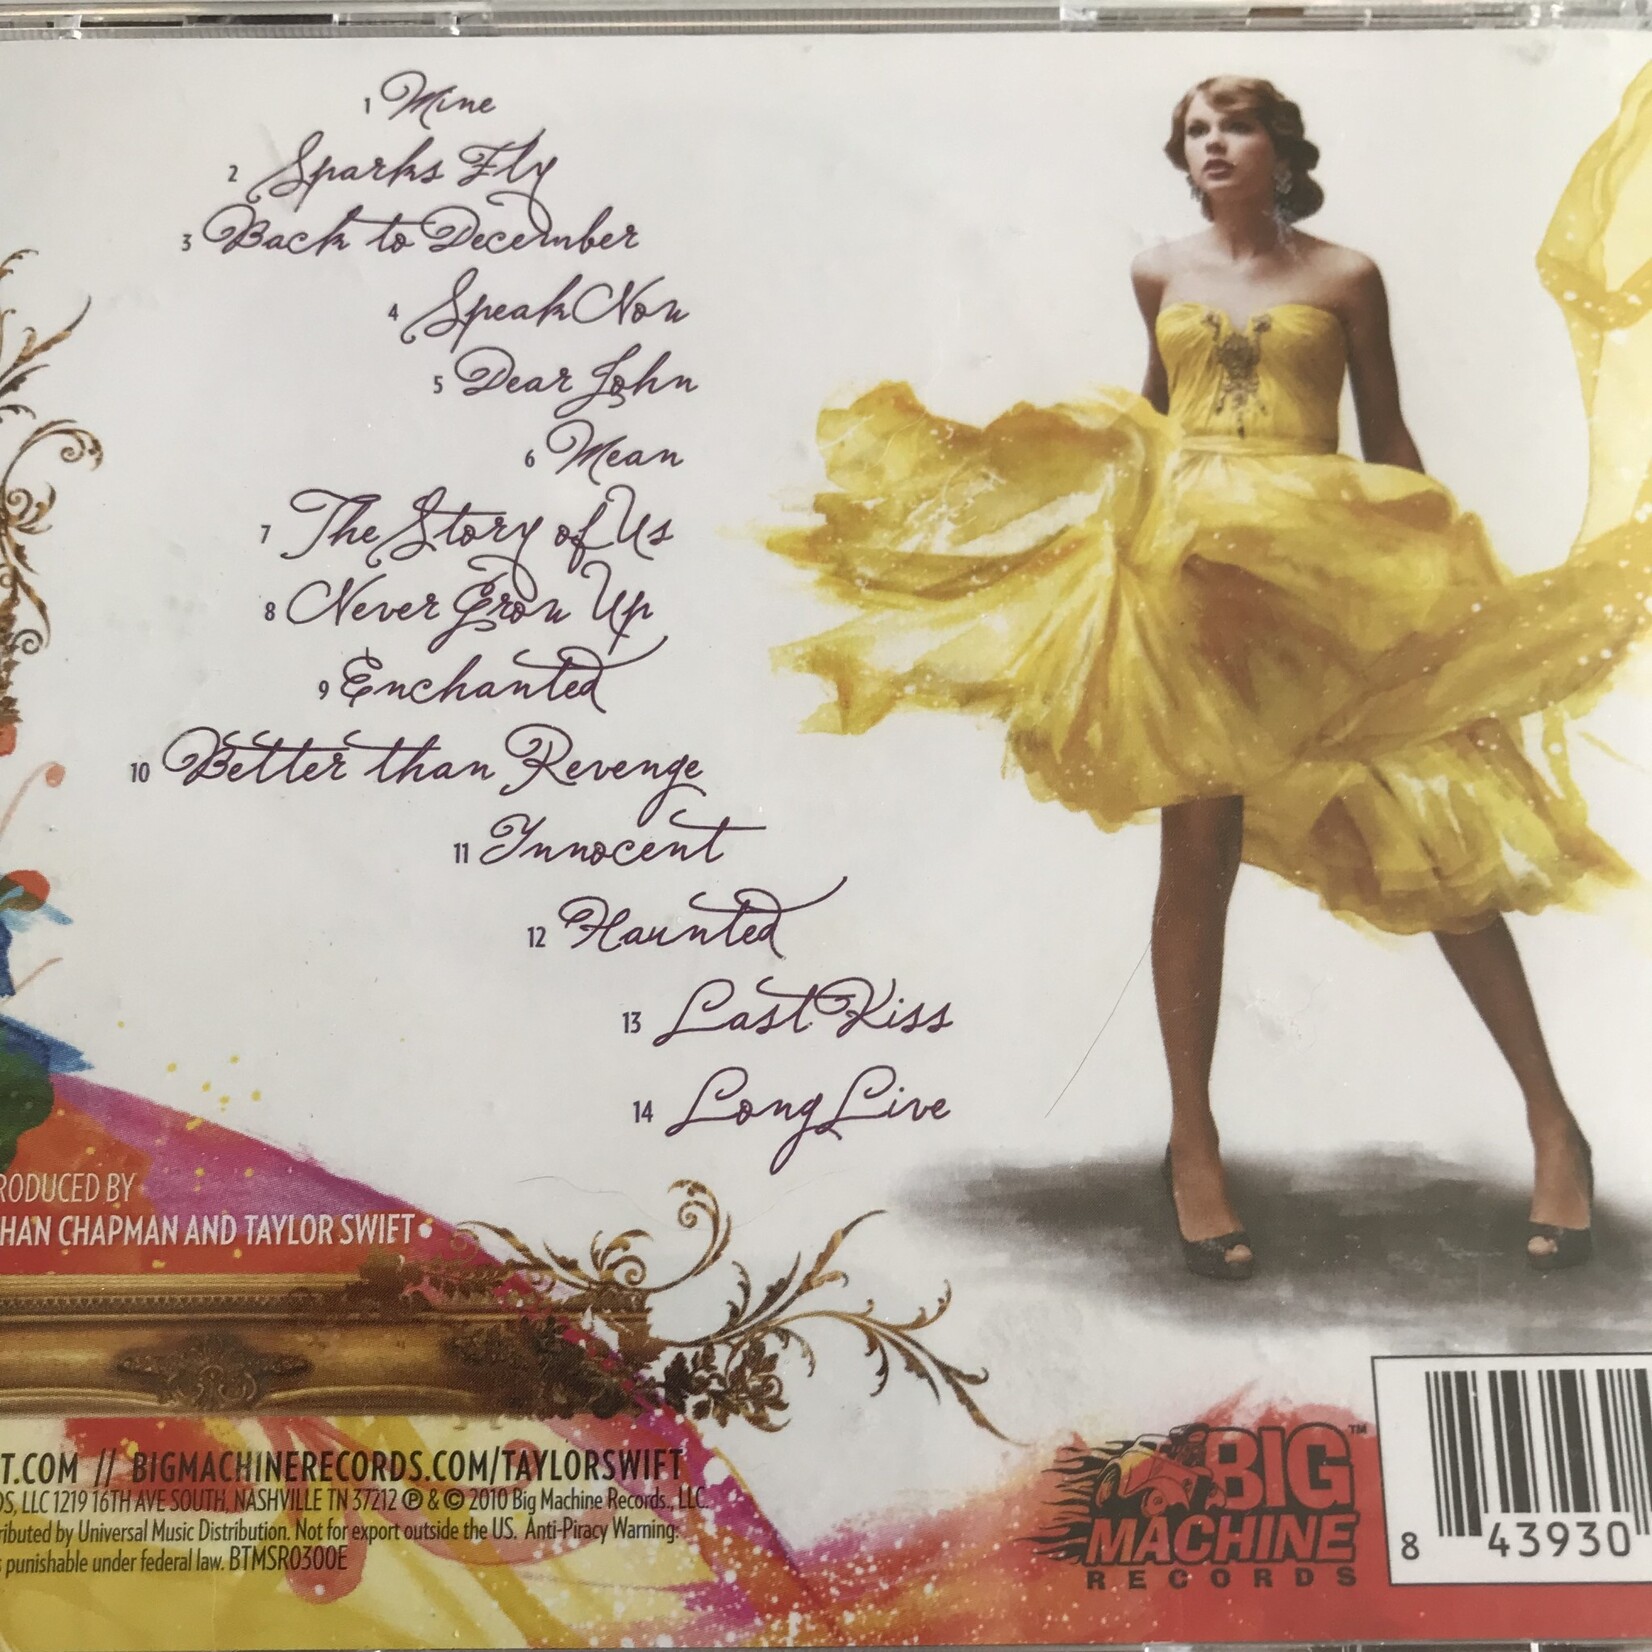 Taylor Swift - Speak Now - CD (USED)